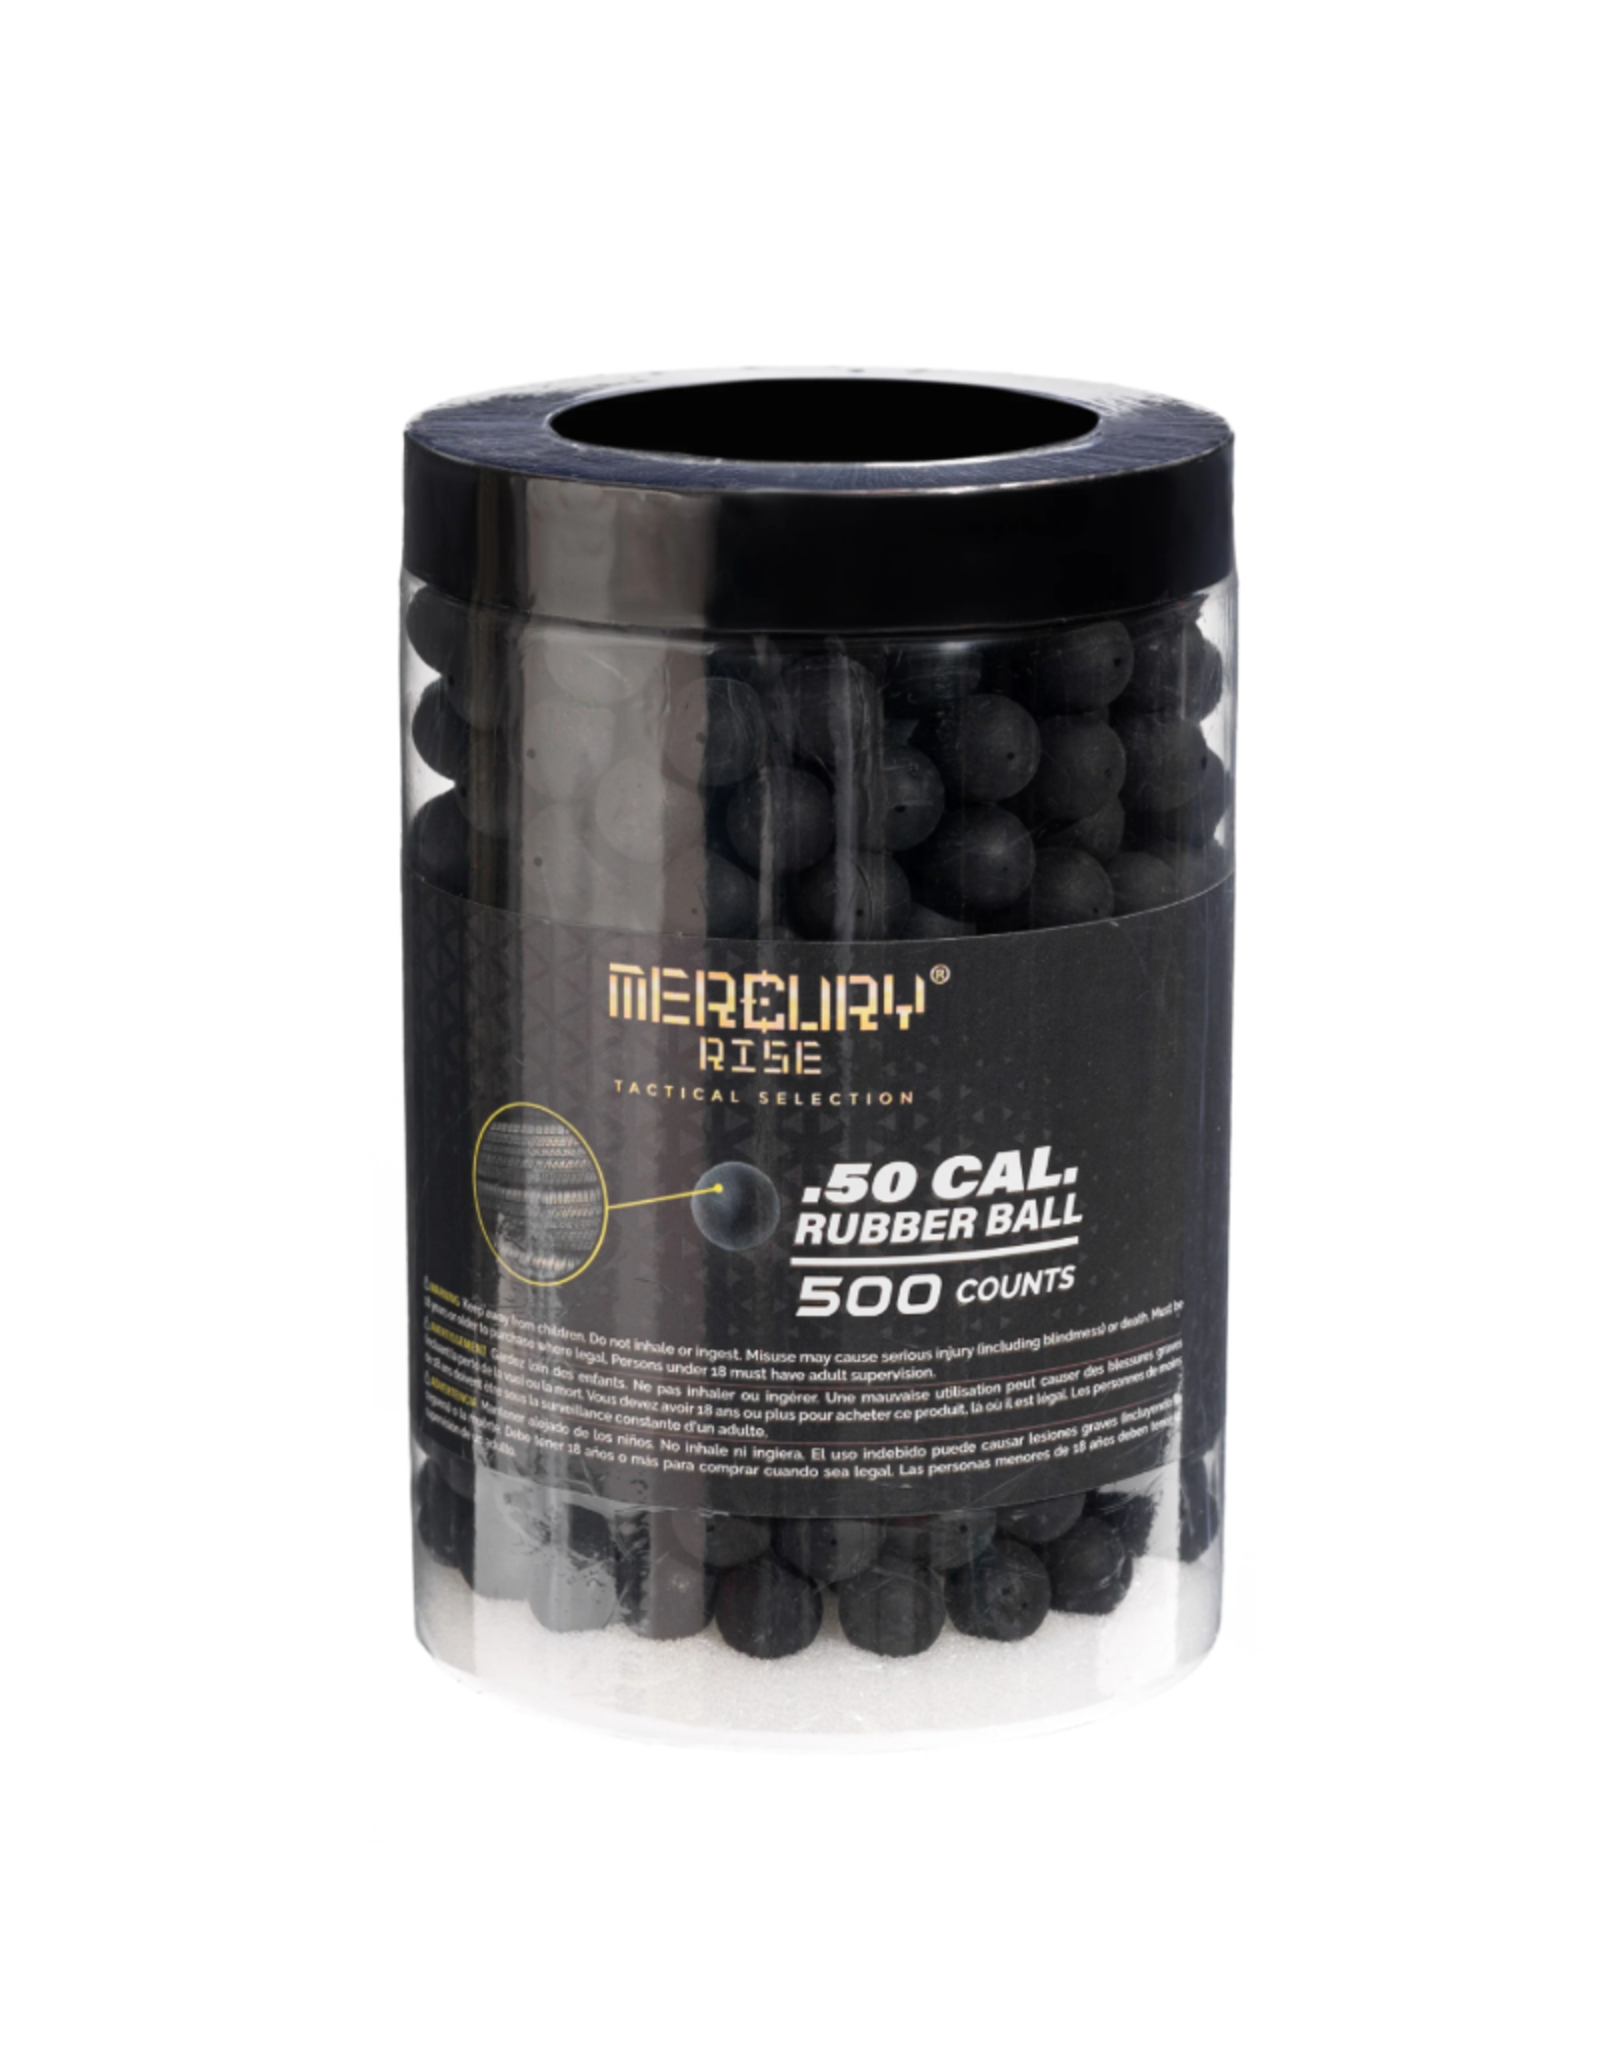 Mercury Rise .50 cal. Mercury Rise Self Defense TPE Rubber Ball Ammo for Training Pistol Paintball Gun (500 Counts Per Jar)